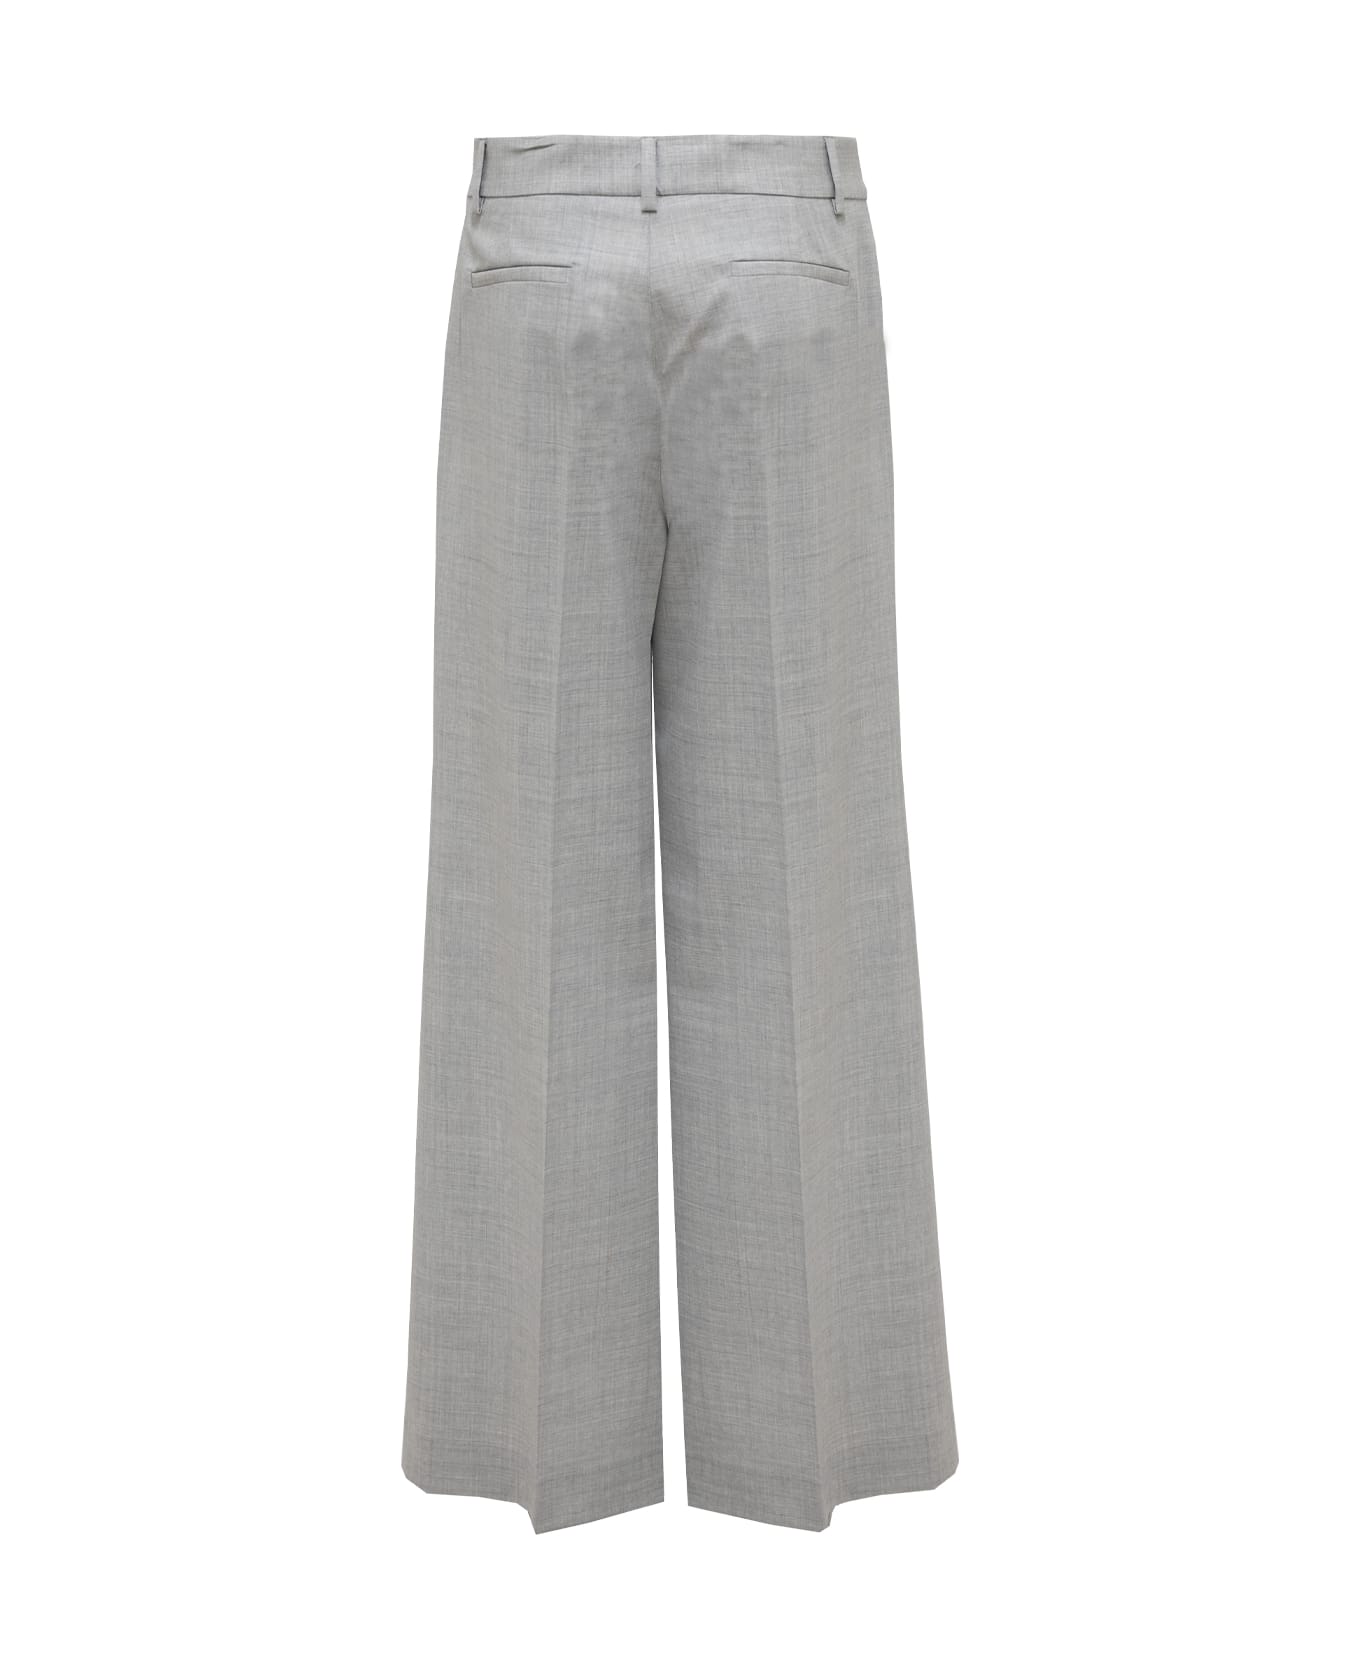 Parosh Pants - Grey